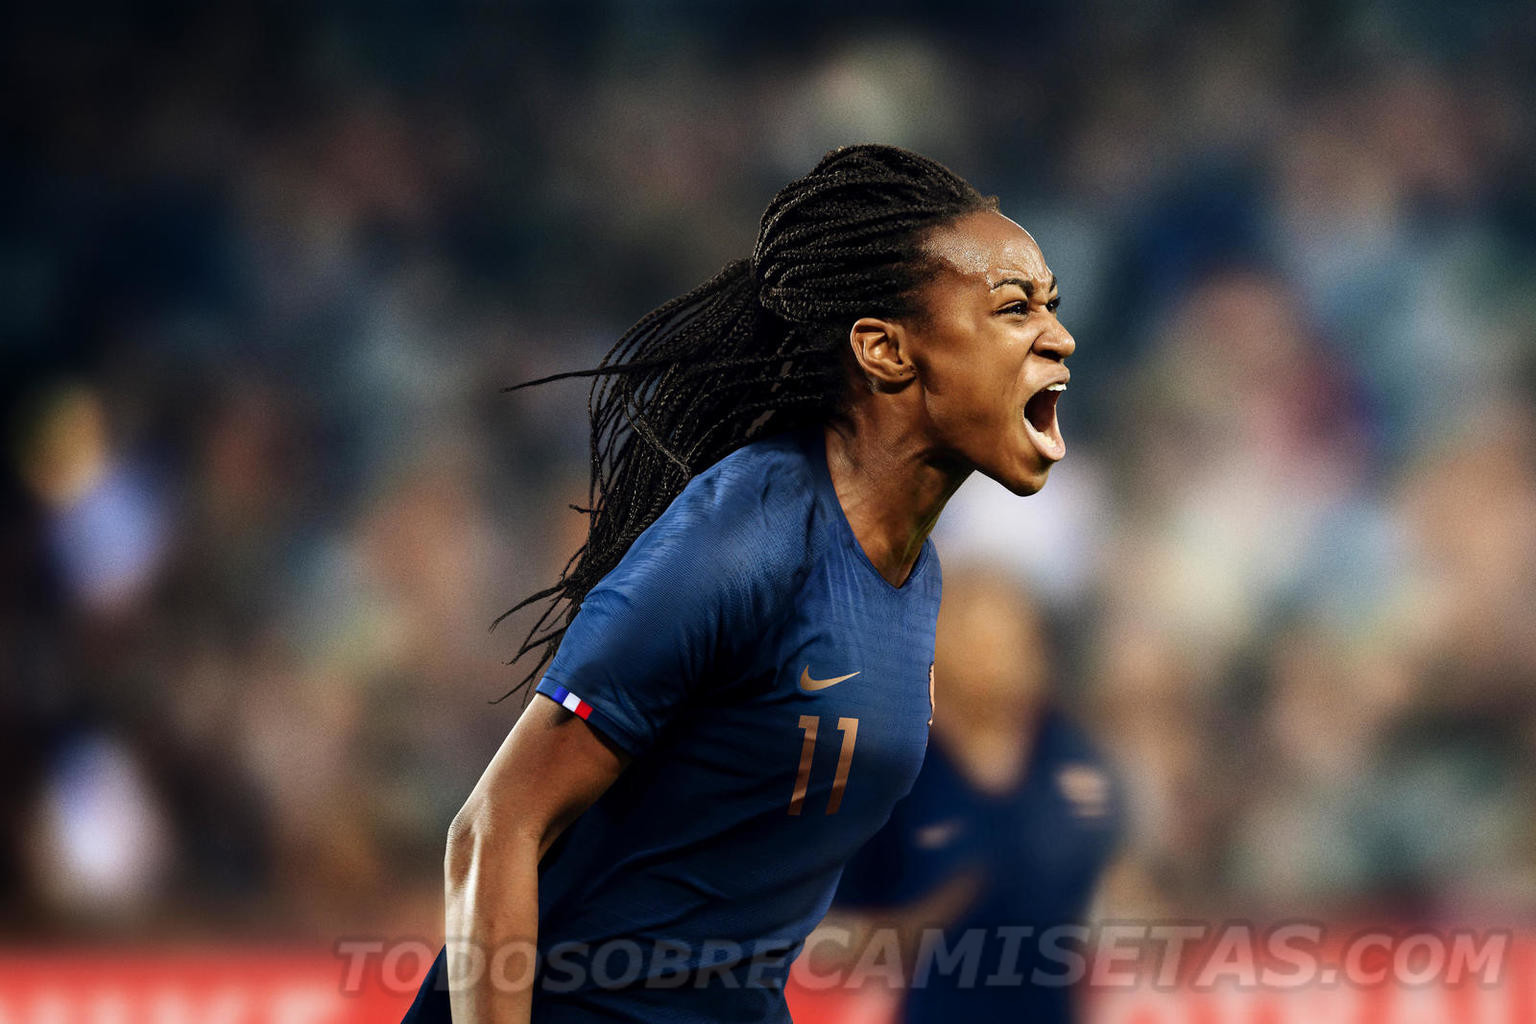 France 2019 Women's World Cup Nike Kits